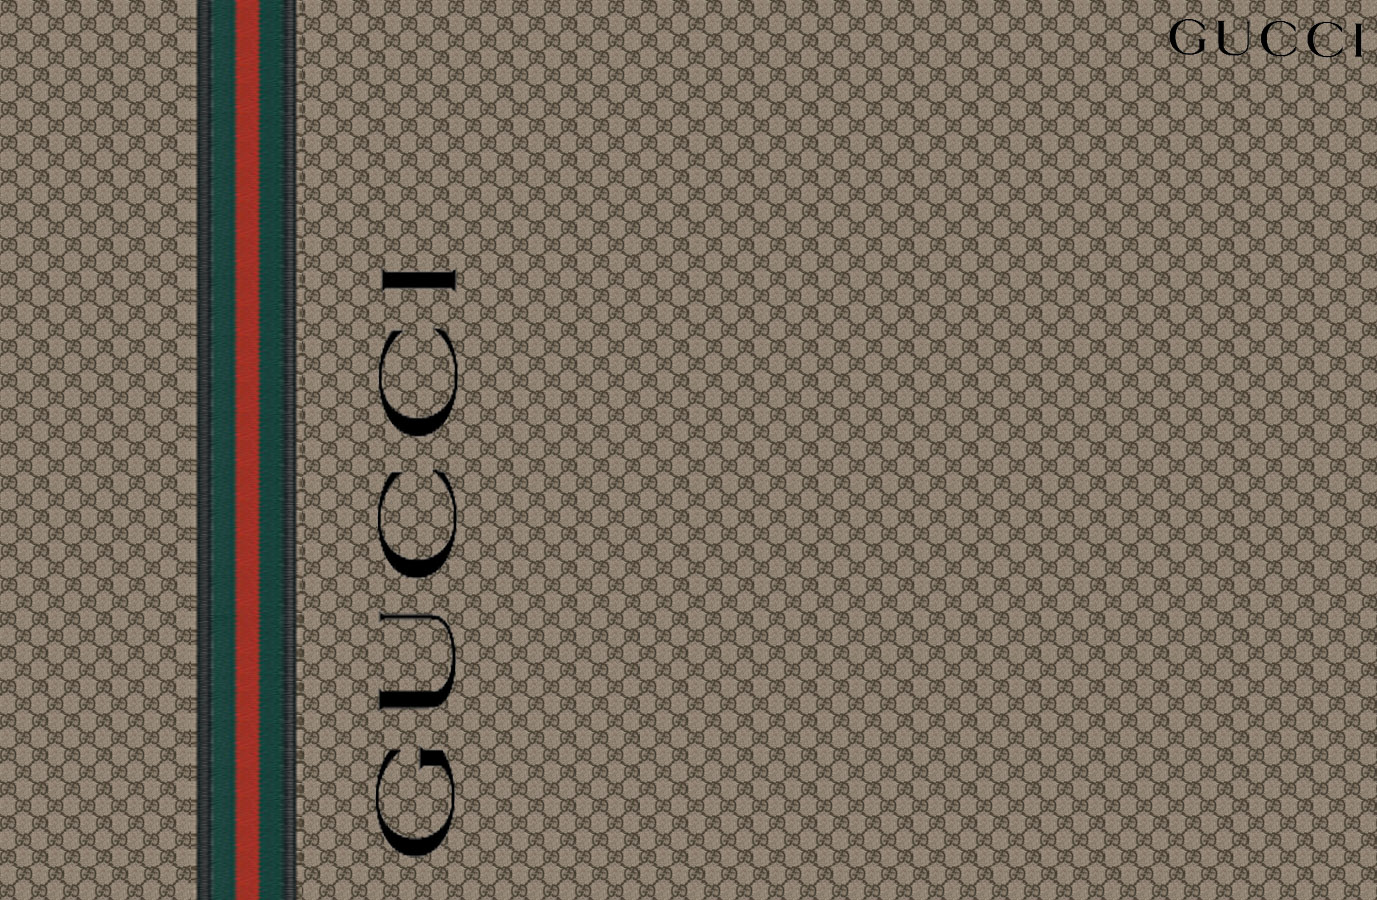 Gucci Print Wallpapers